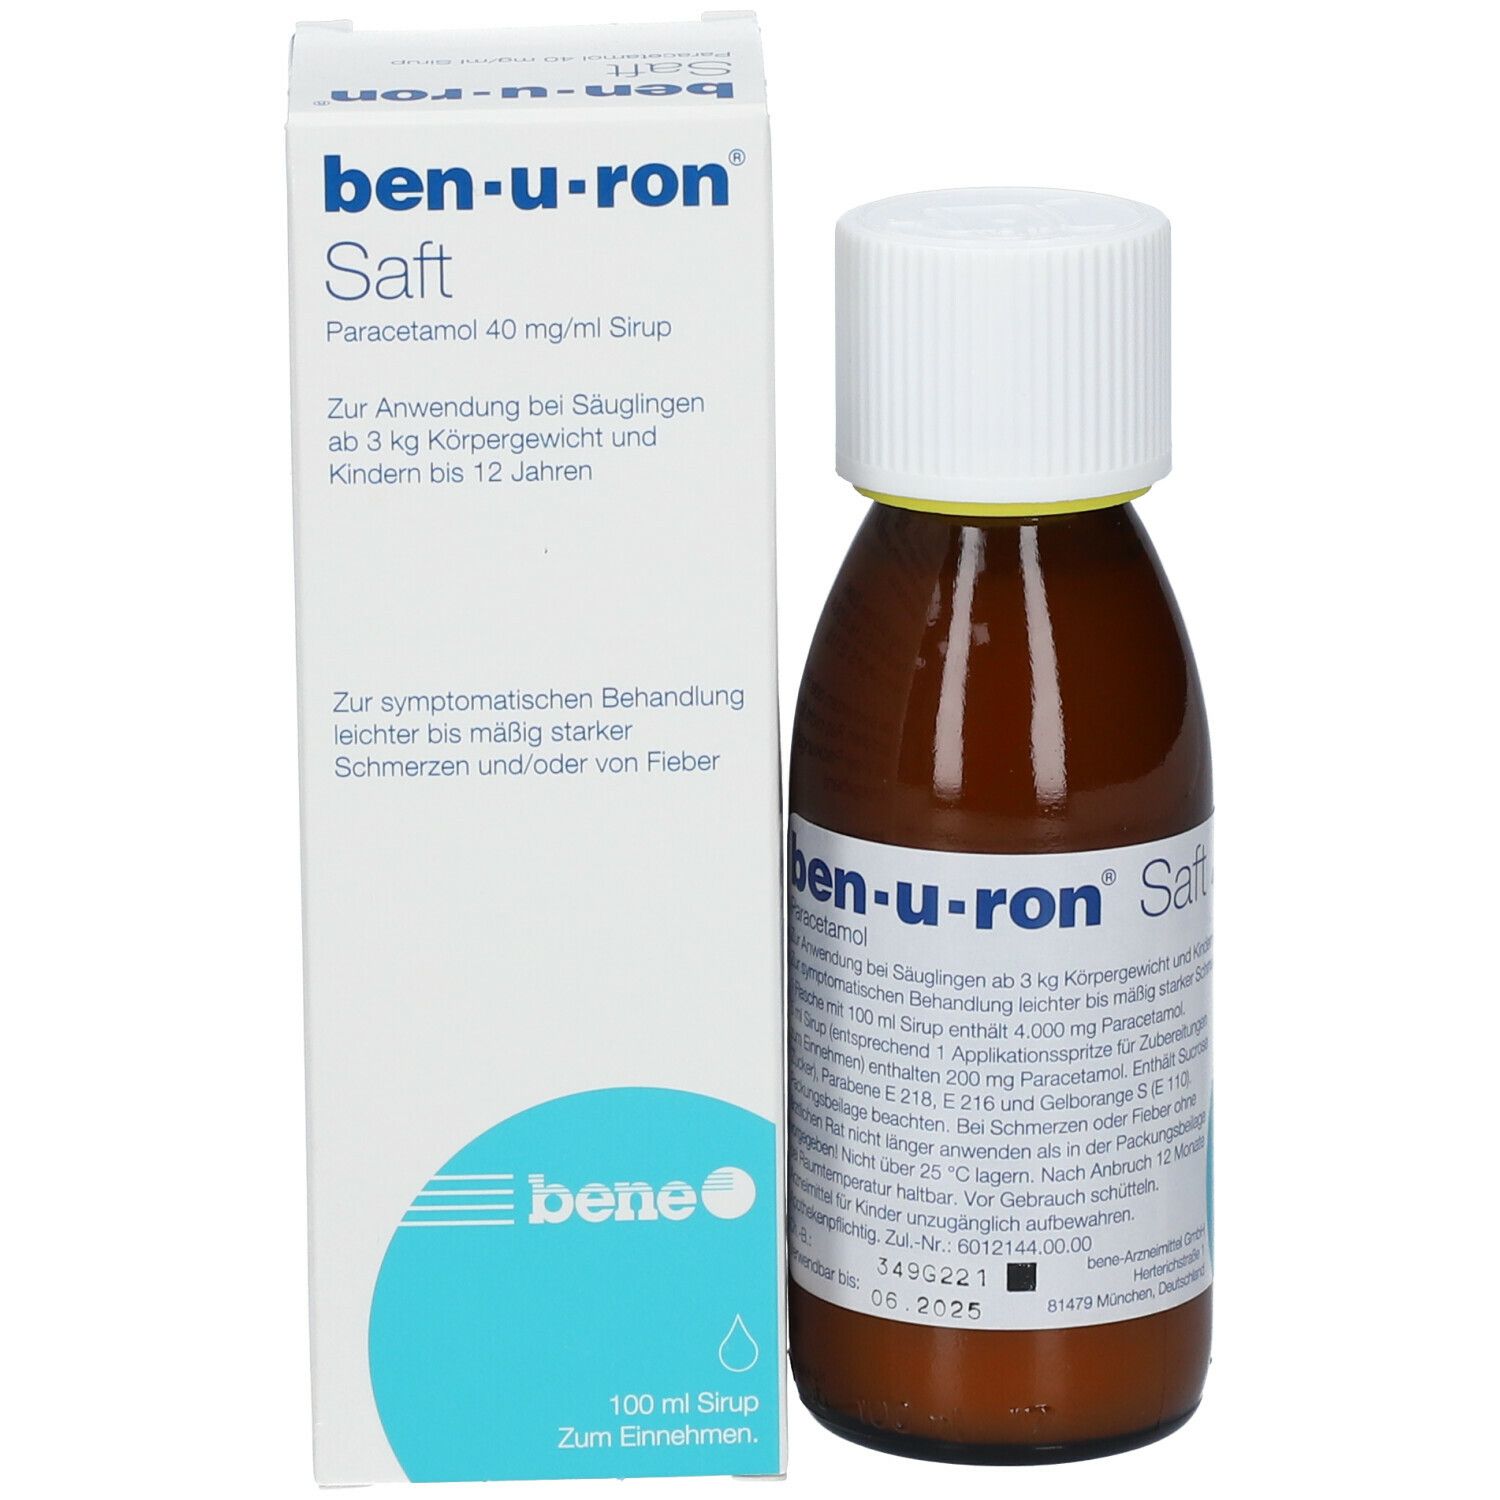 ben-u-ron® Saft